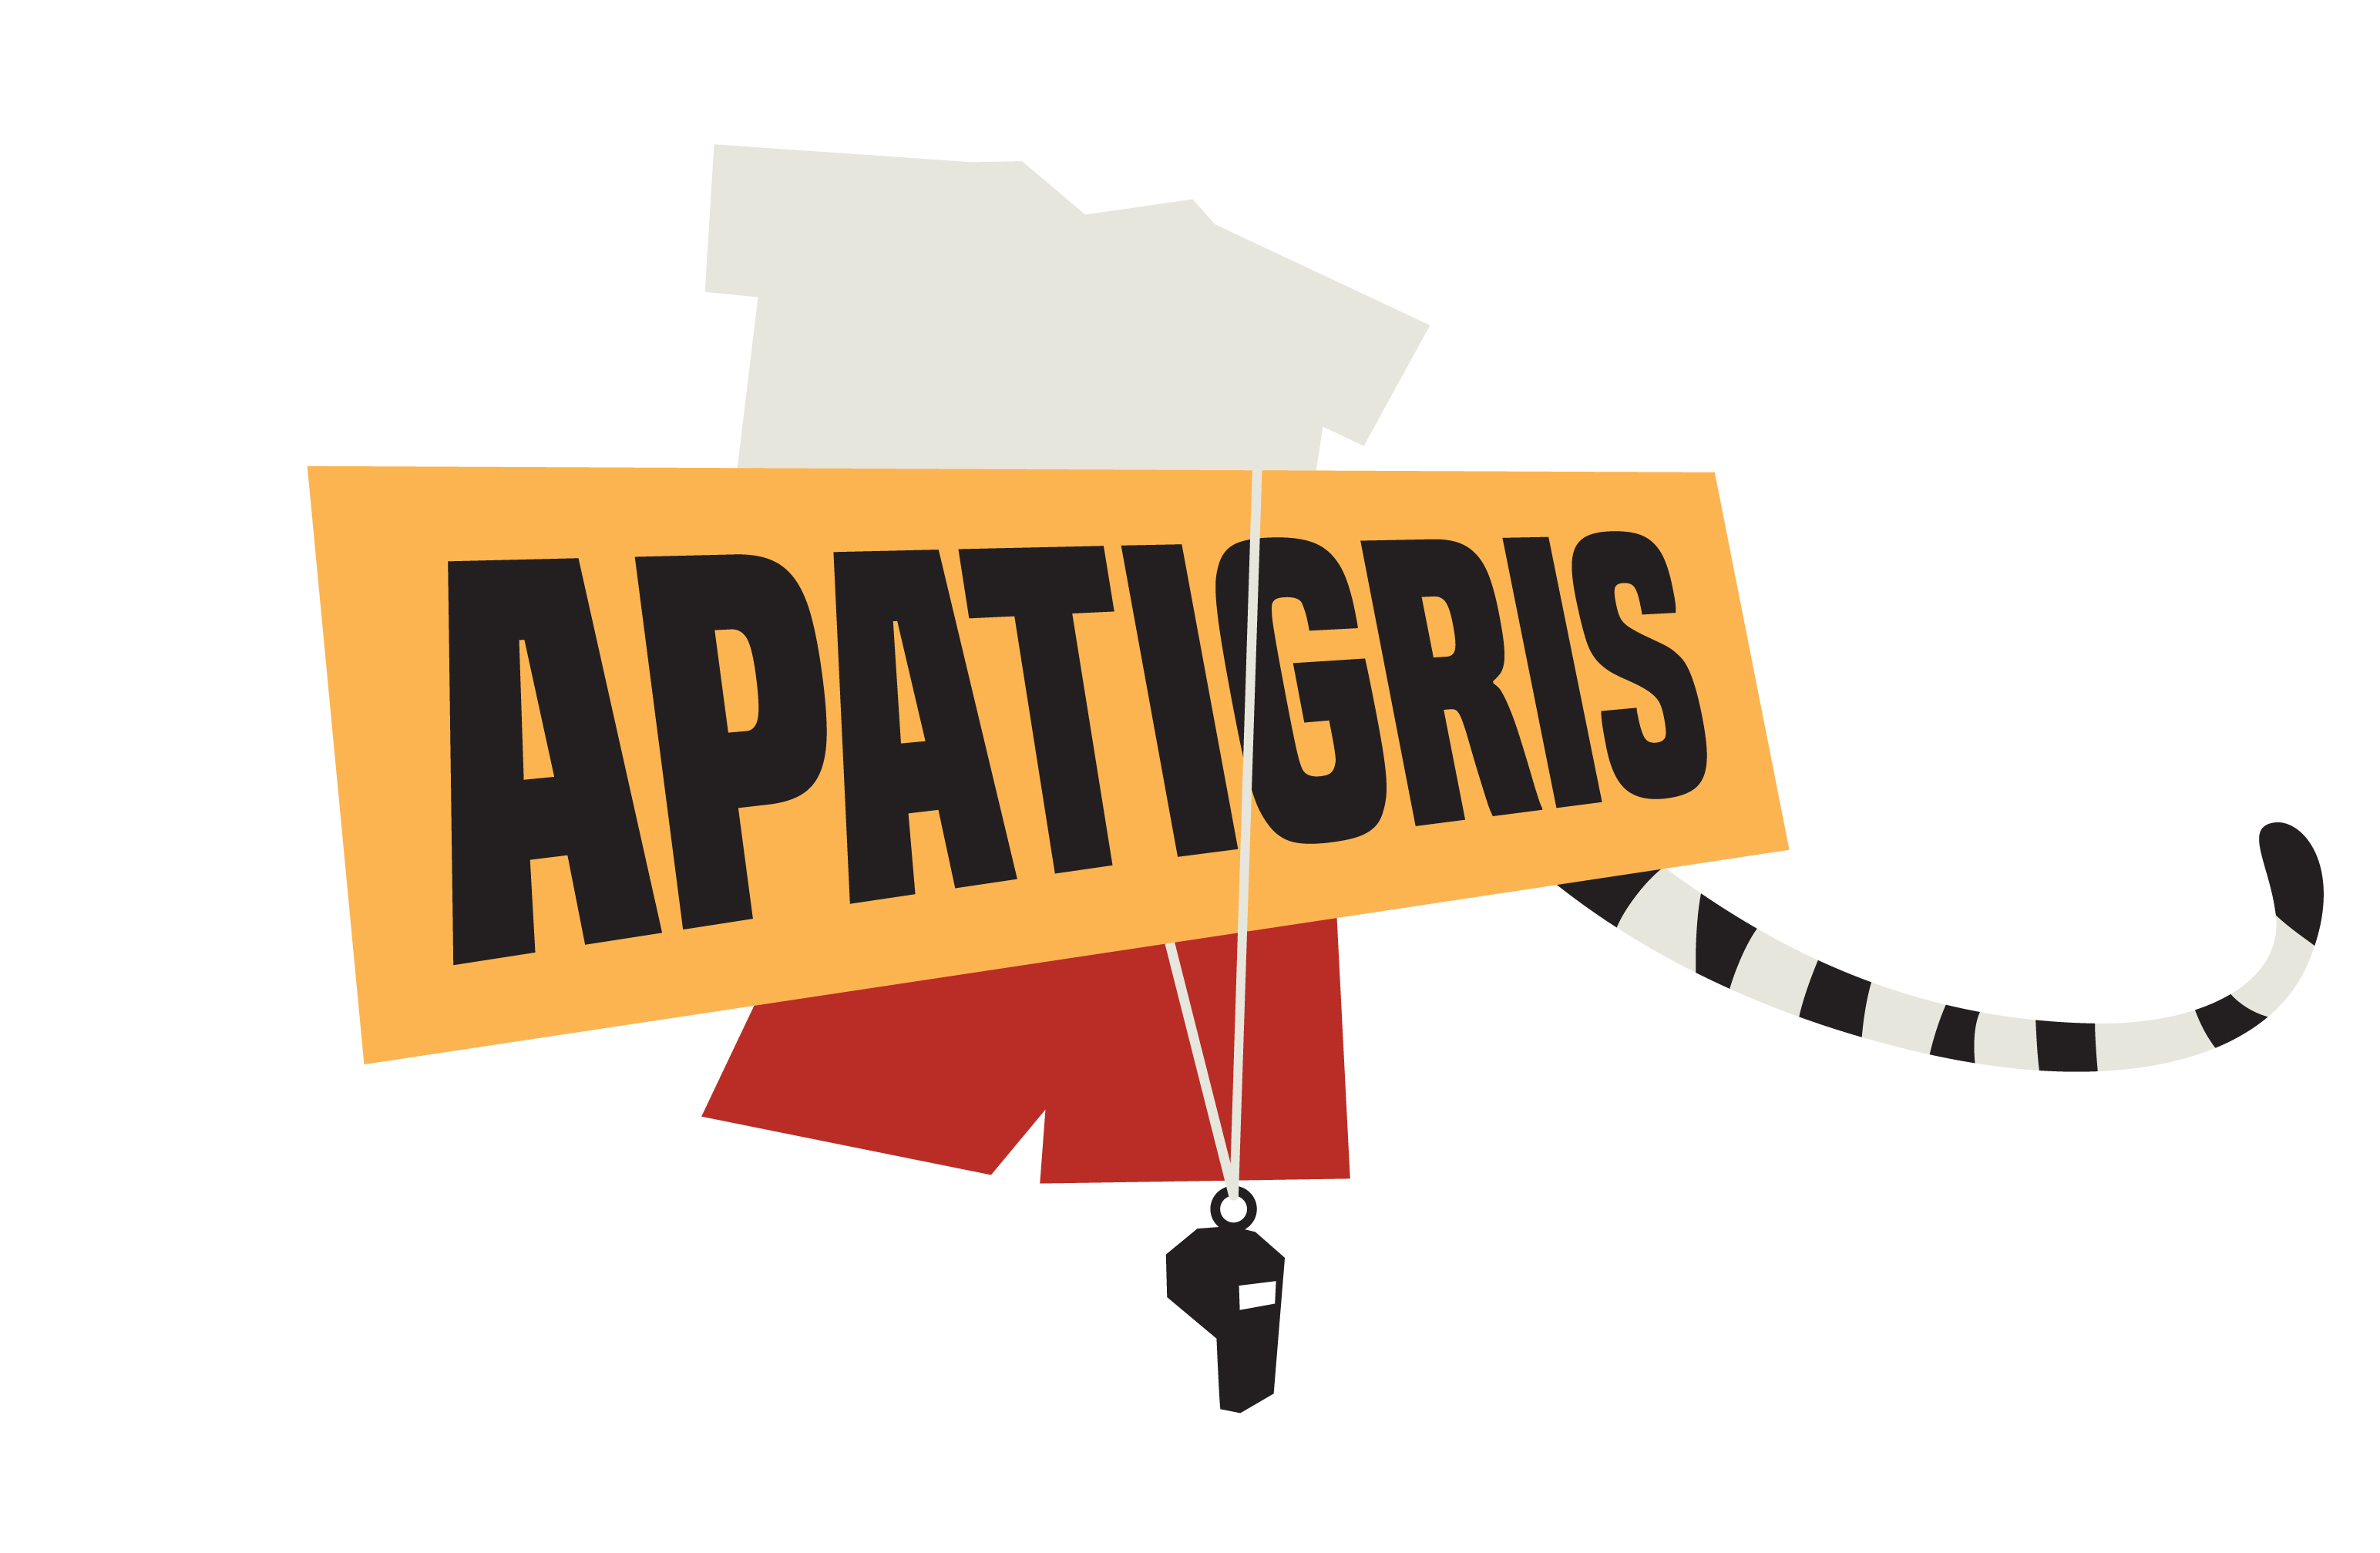 Apatigris